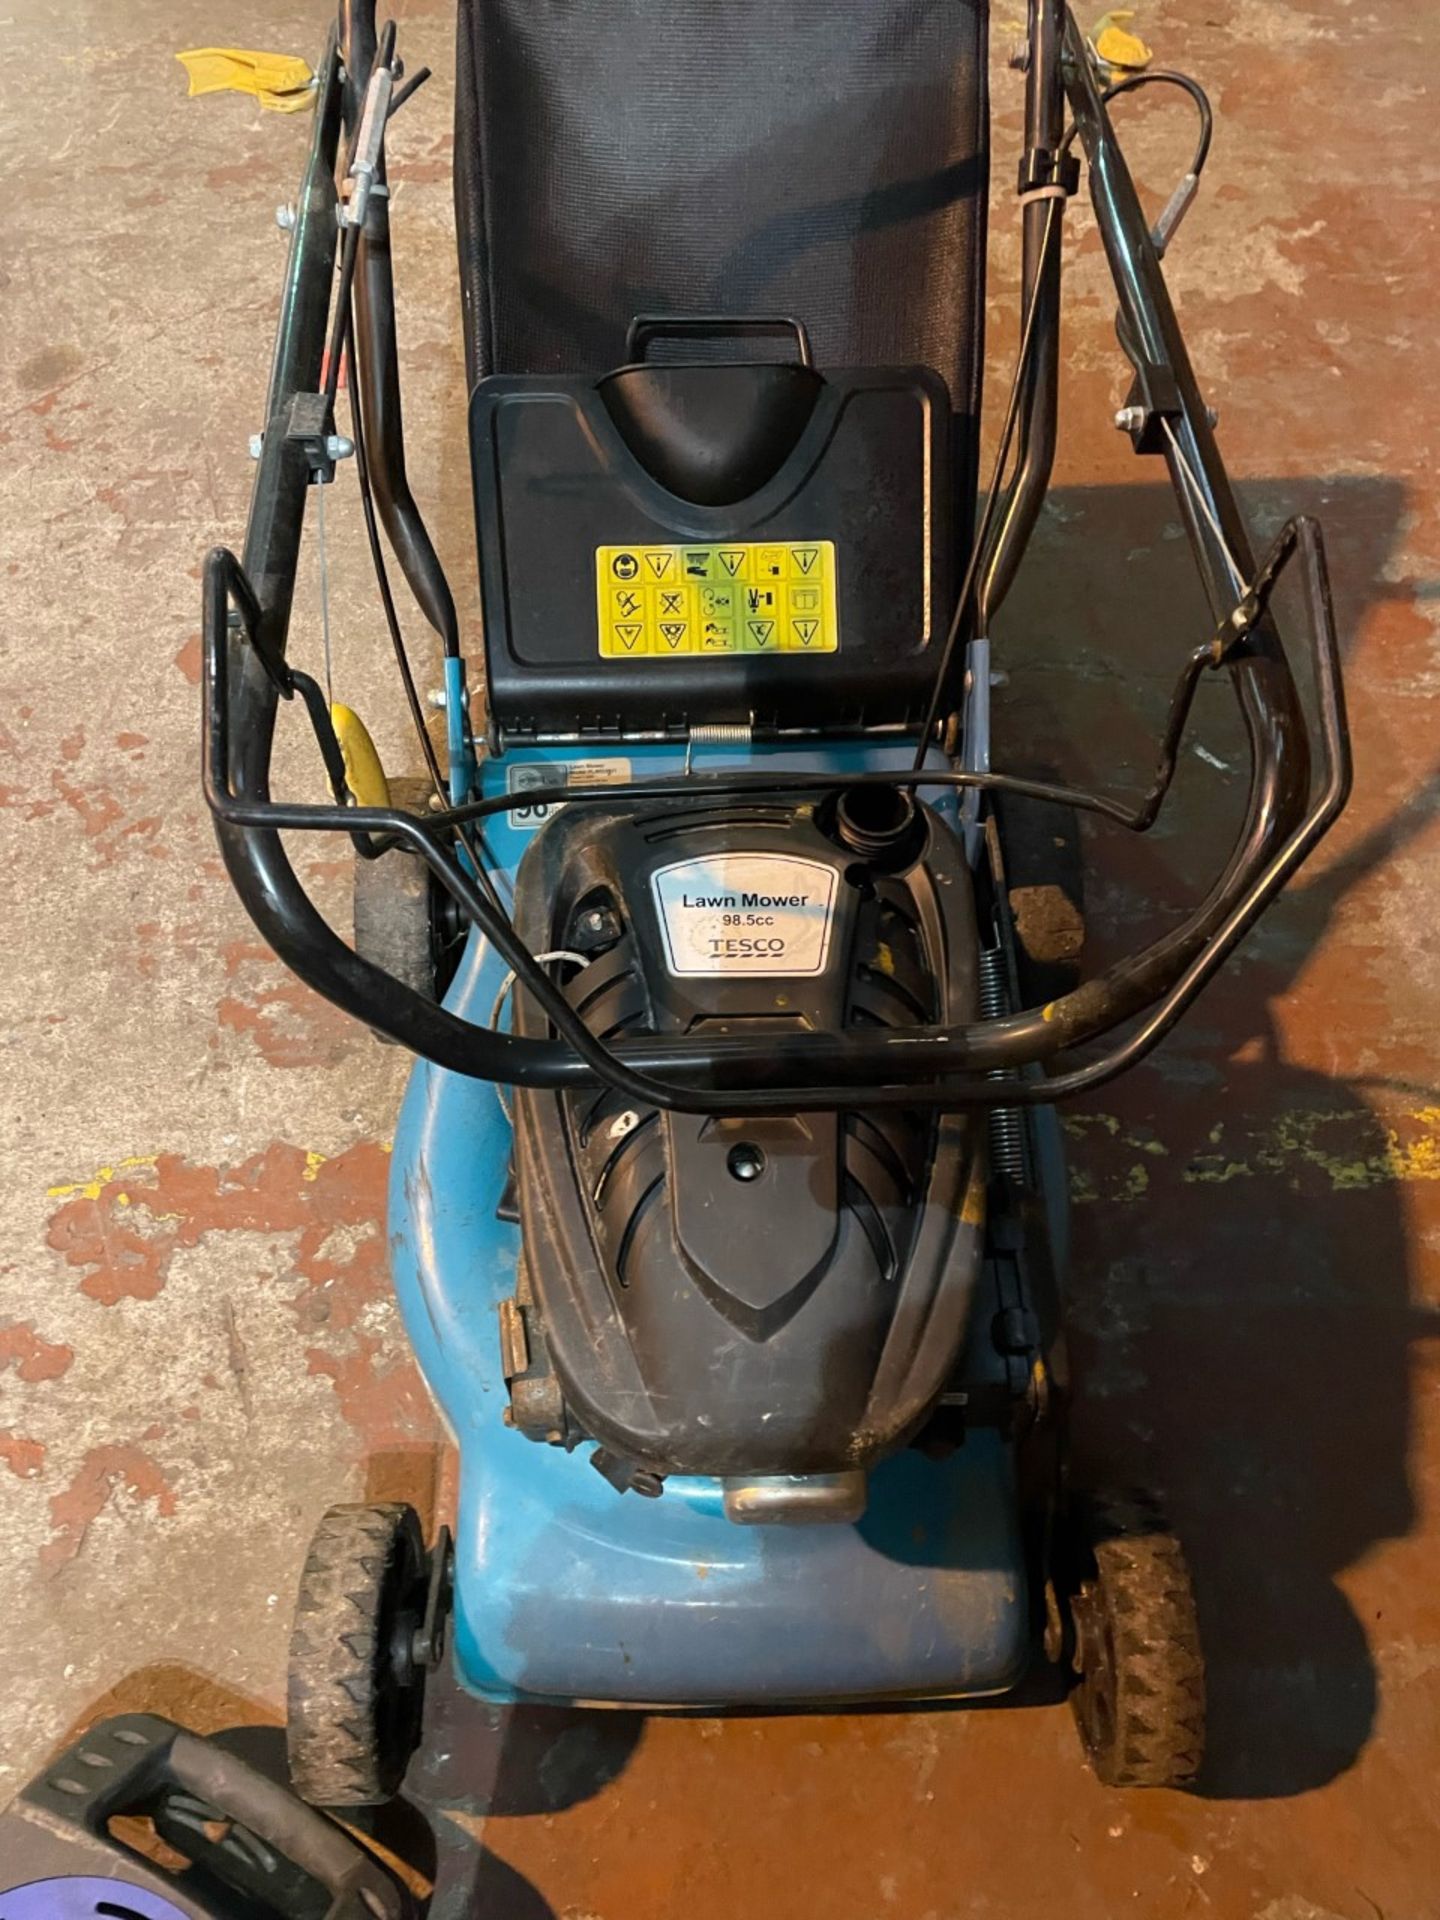 Tesco lawn mower 98.5cc. Selling as spares or repair need new petrol tank lid. - Image 2 of 2